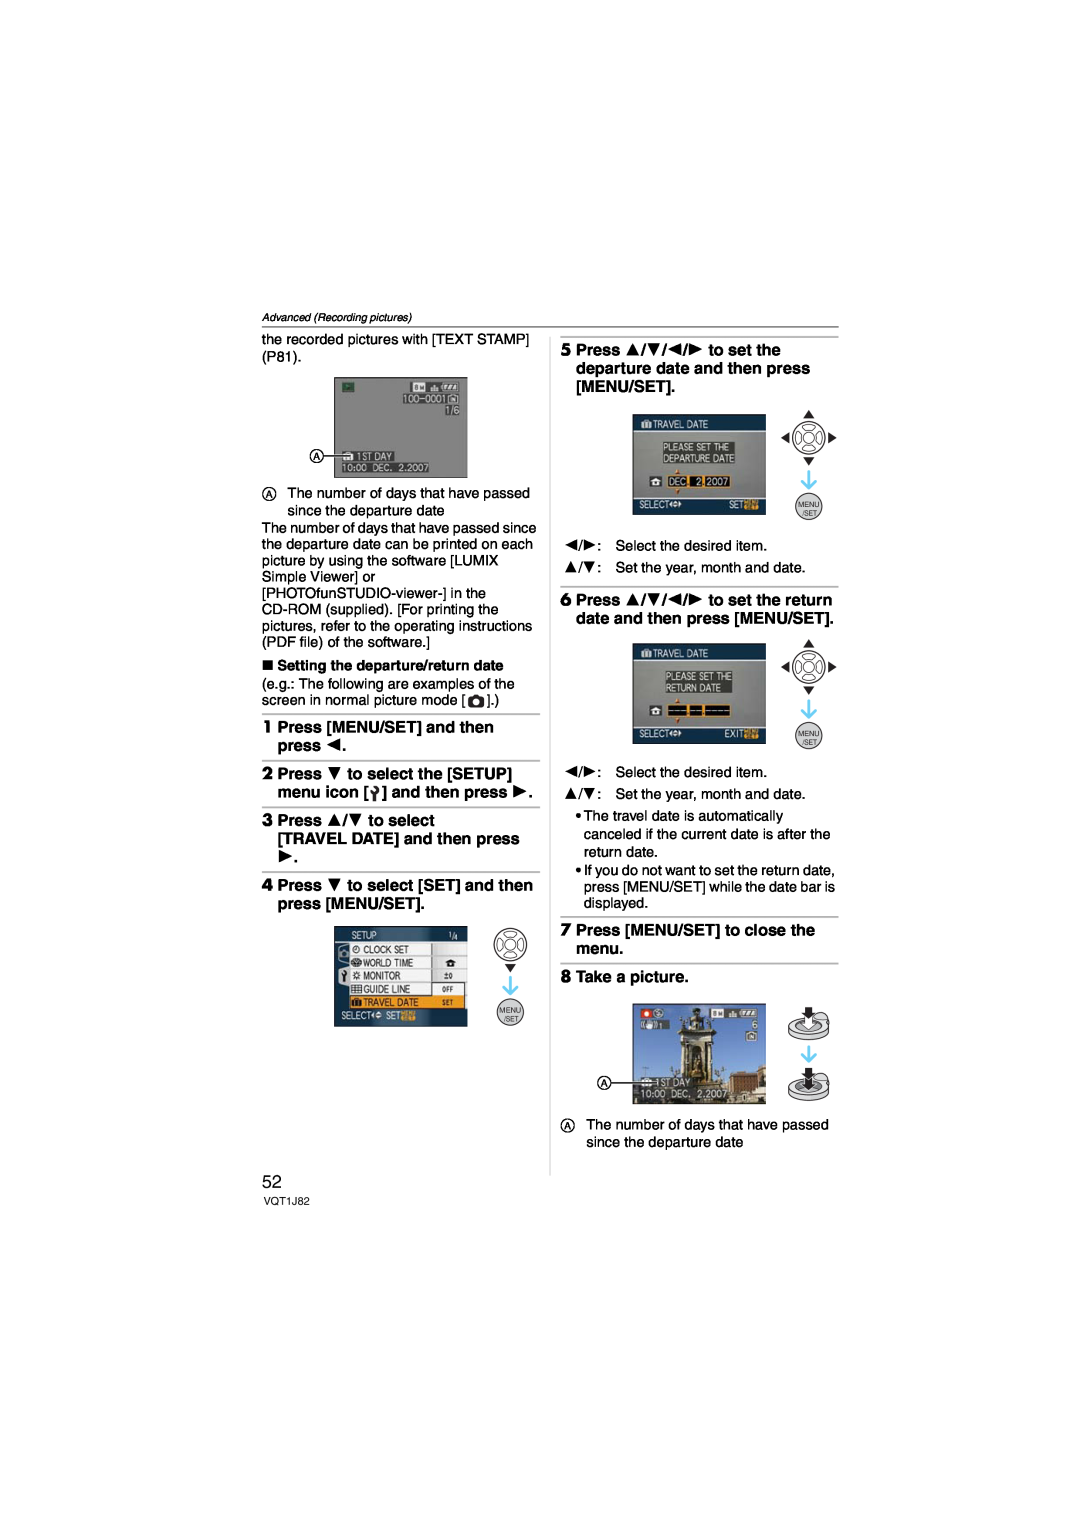 Panasonic DMC-FX33 Press MENU/SET and then press, Press 4 to select the SETUP menu icon and then press 